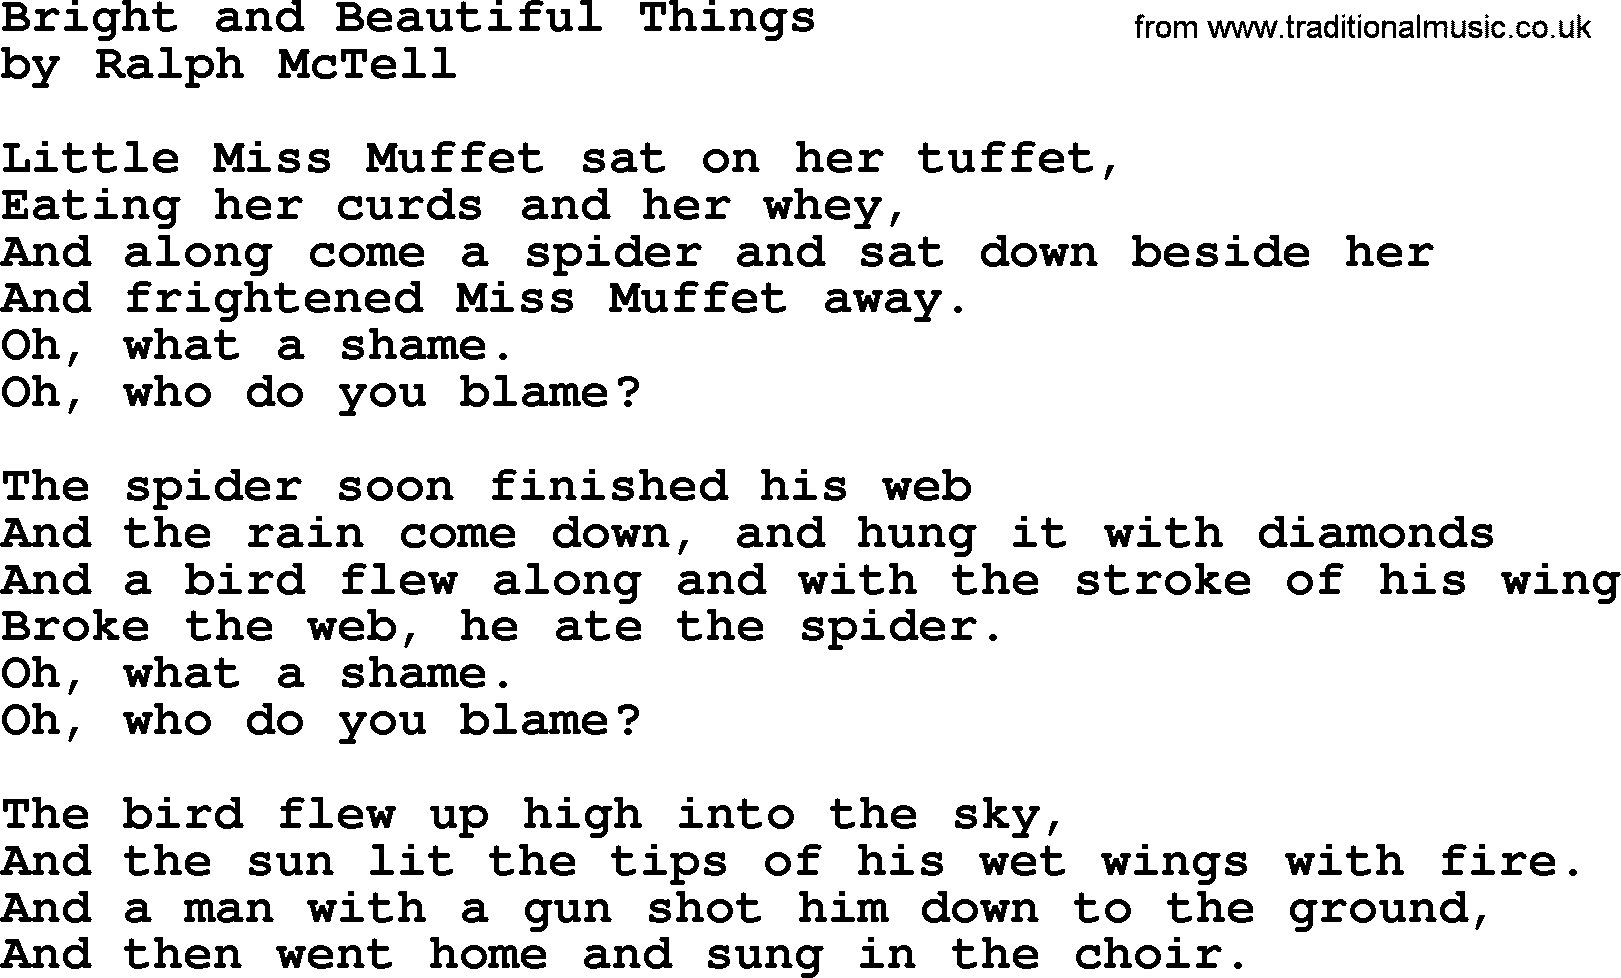 Ralph McTell Song: Bright And Beautiful Things, lyrics